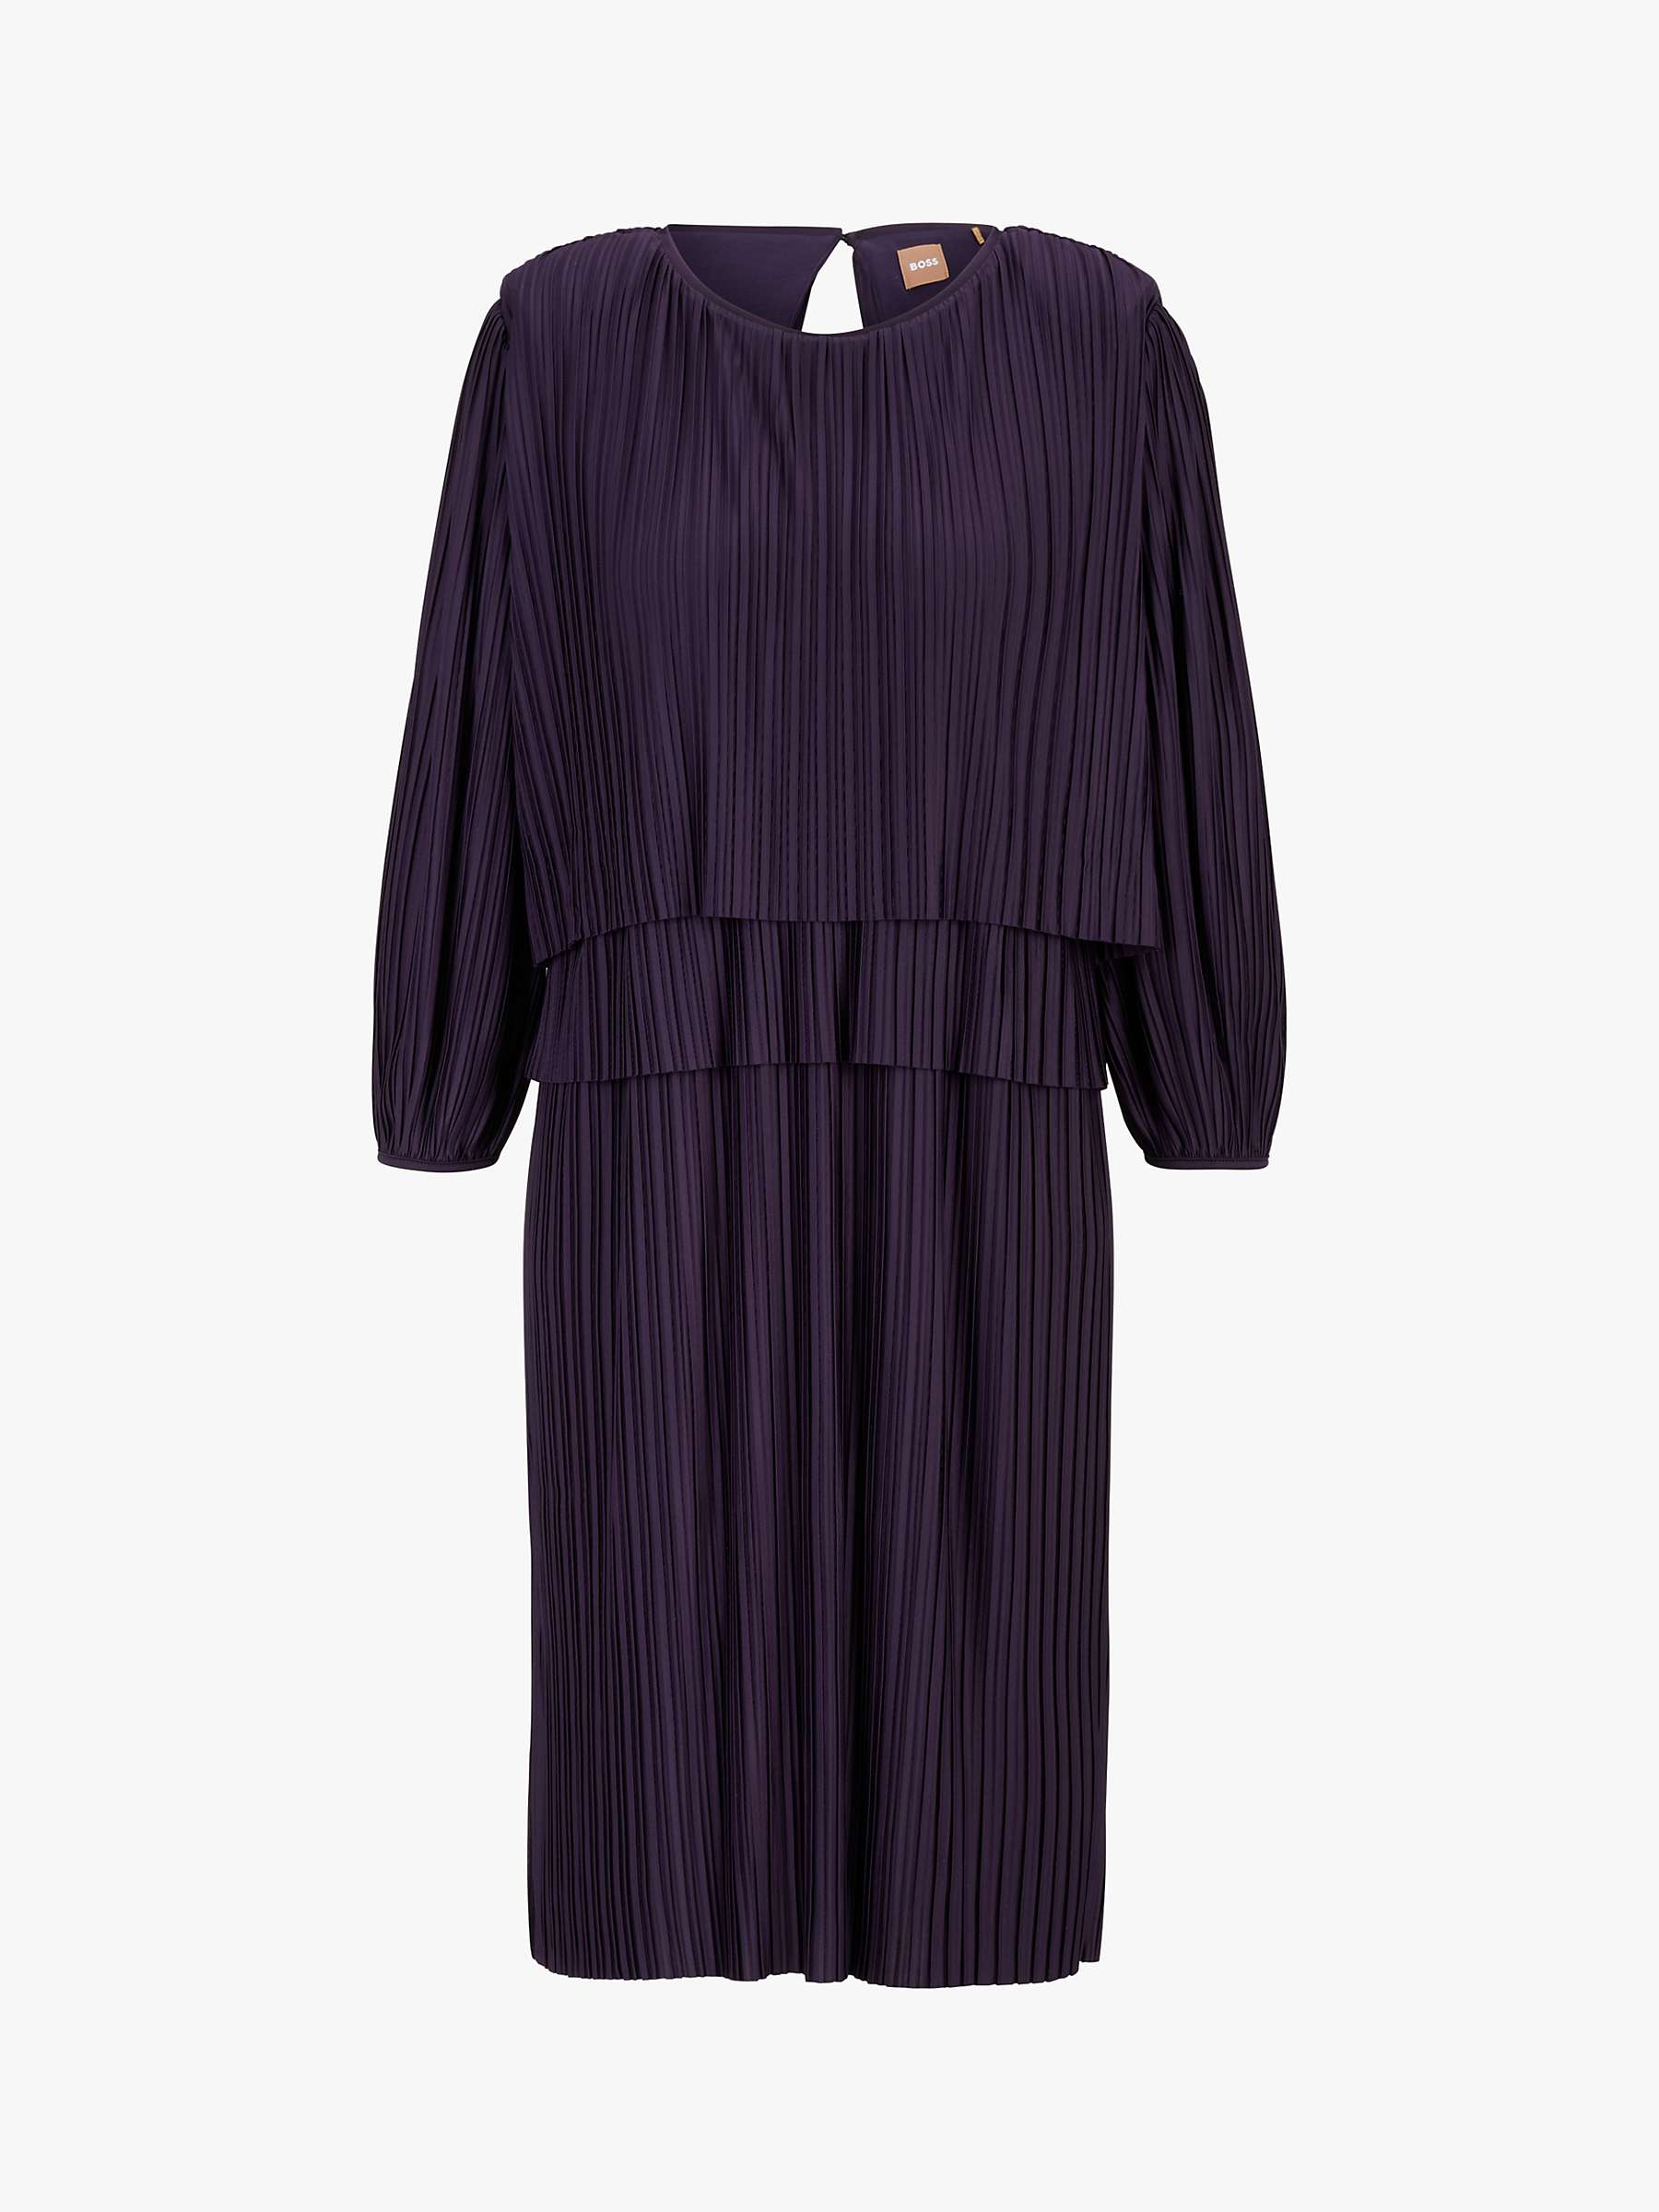 HUGO BOSS Emanis Pleated Dress, Dark Purple at John Lewis & Partners